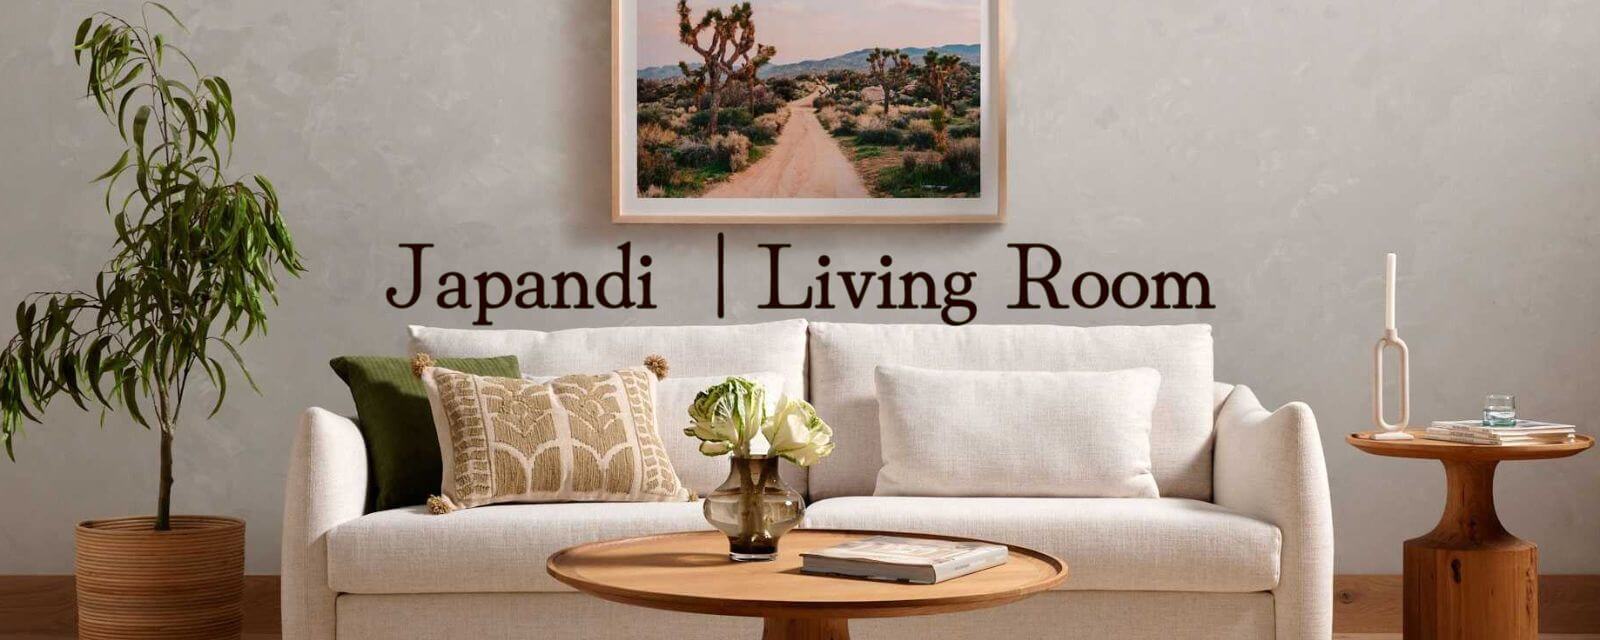 Japandi | Living Room